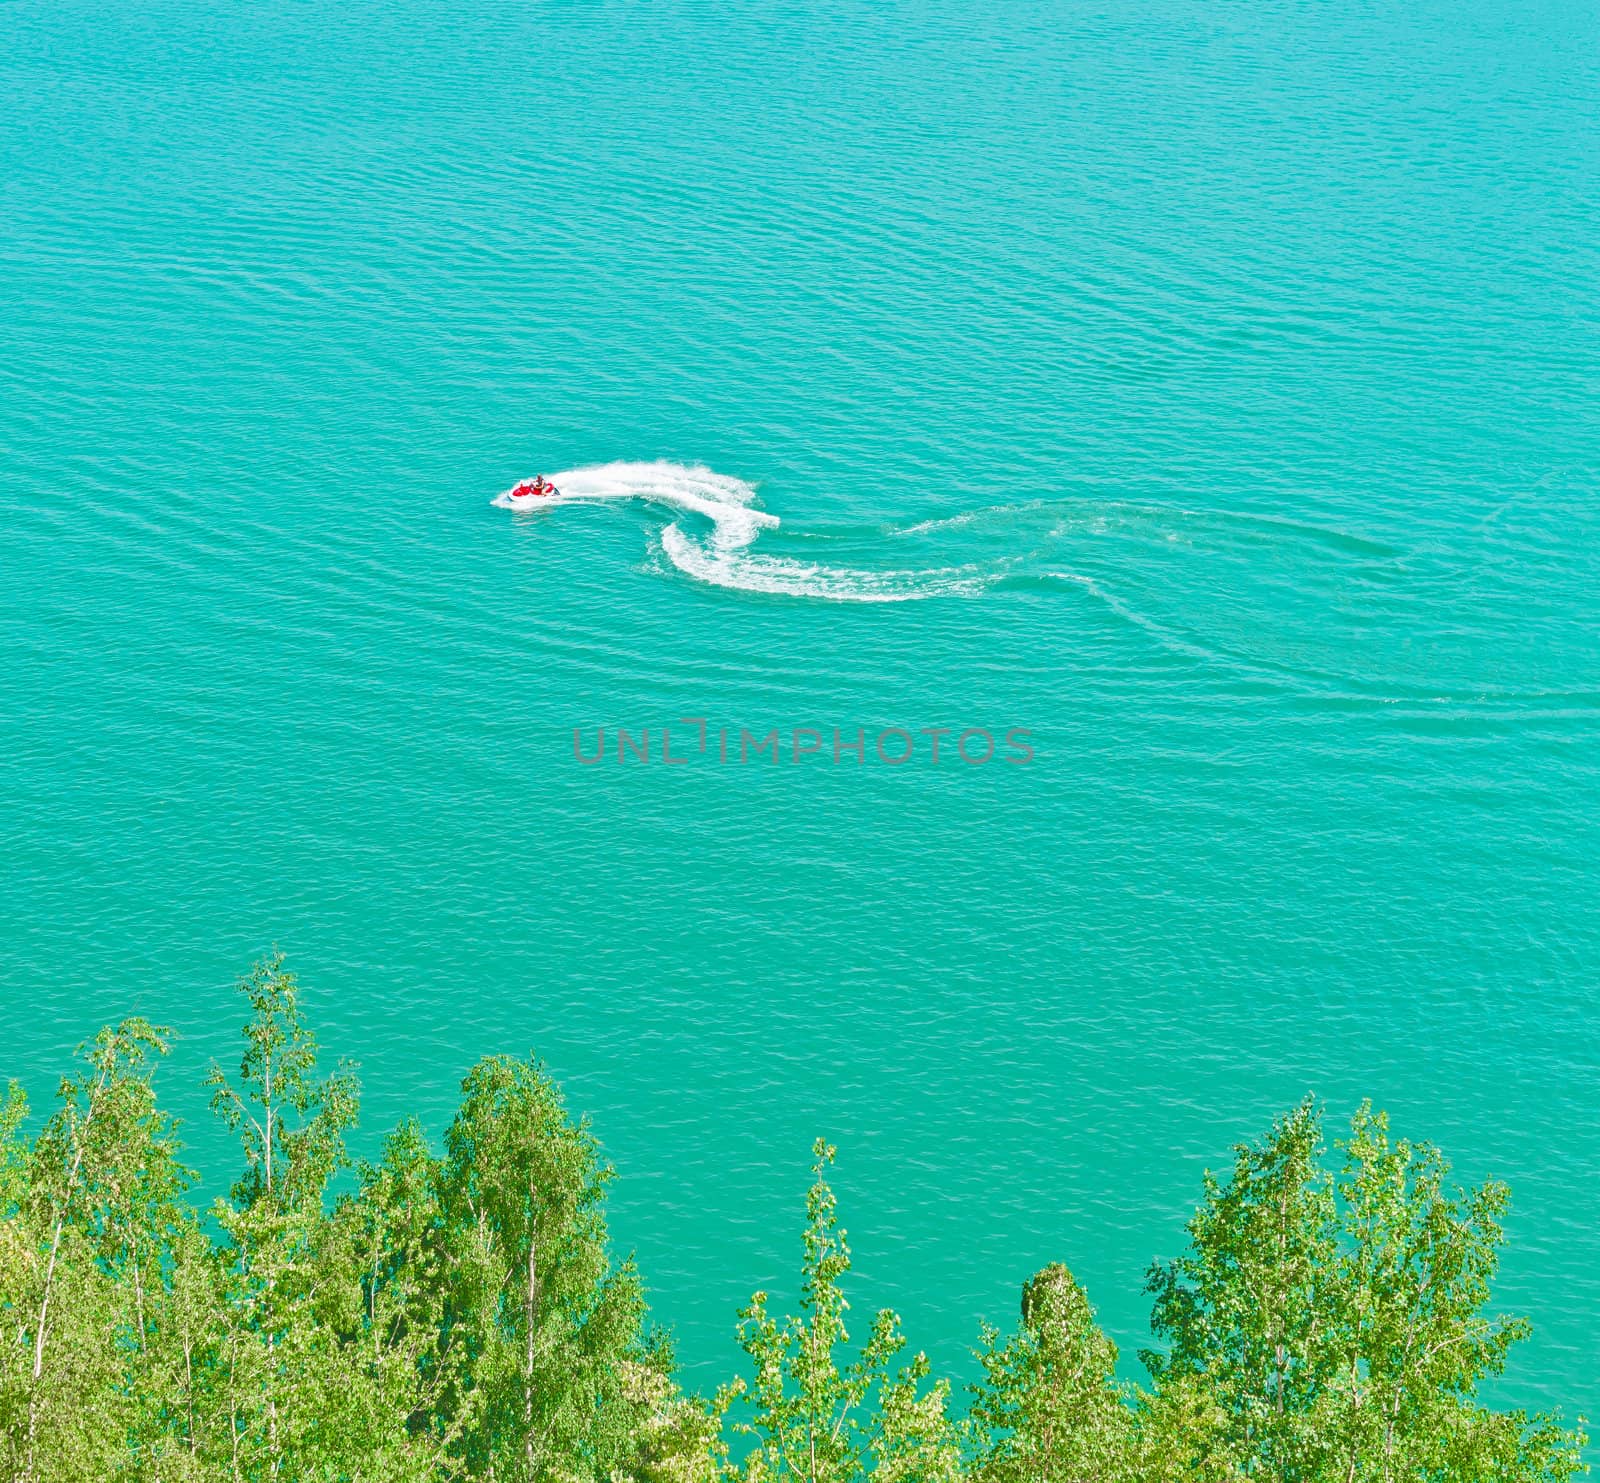 Speedy water scooter on Blue Lake by photoroman